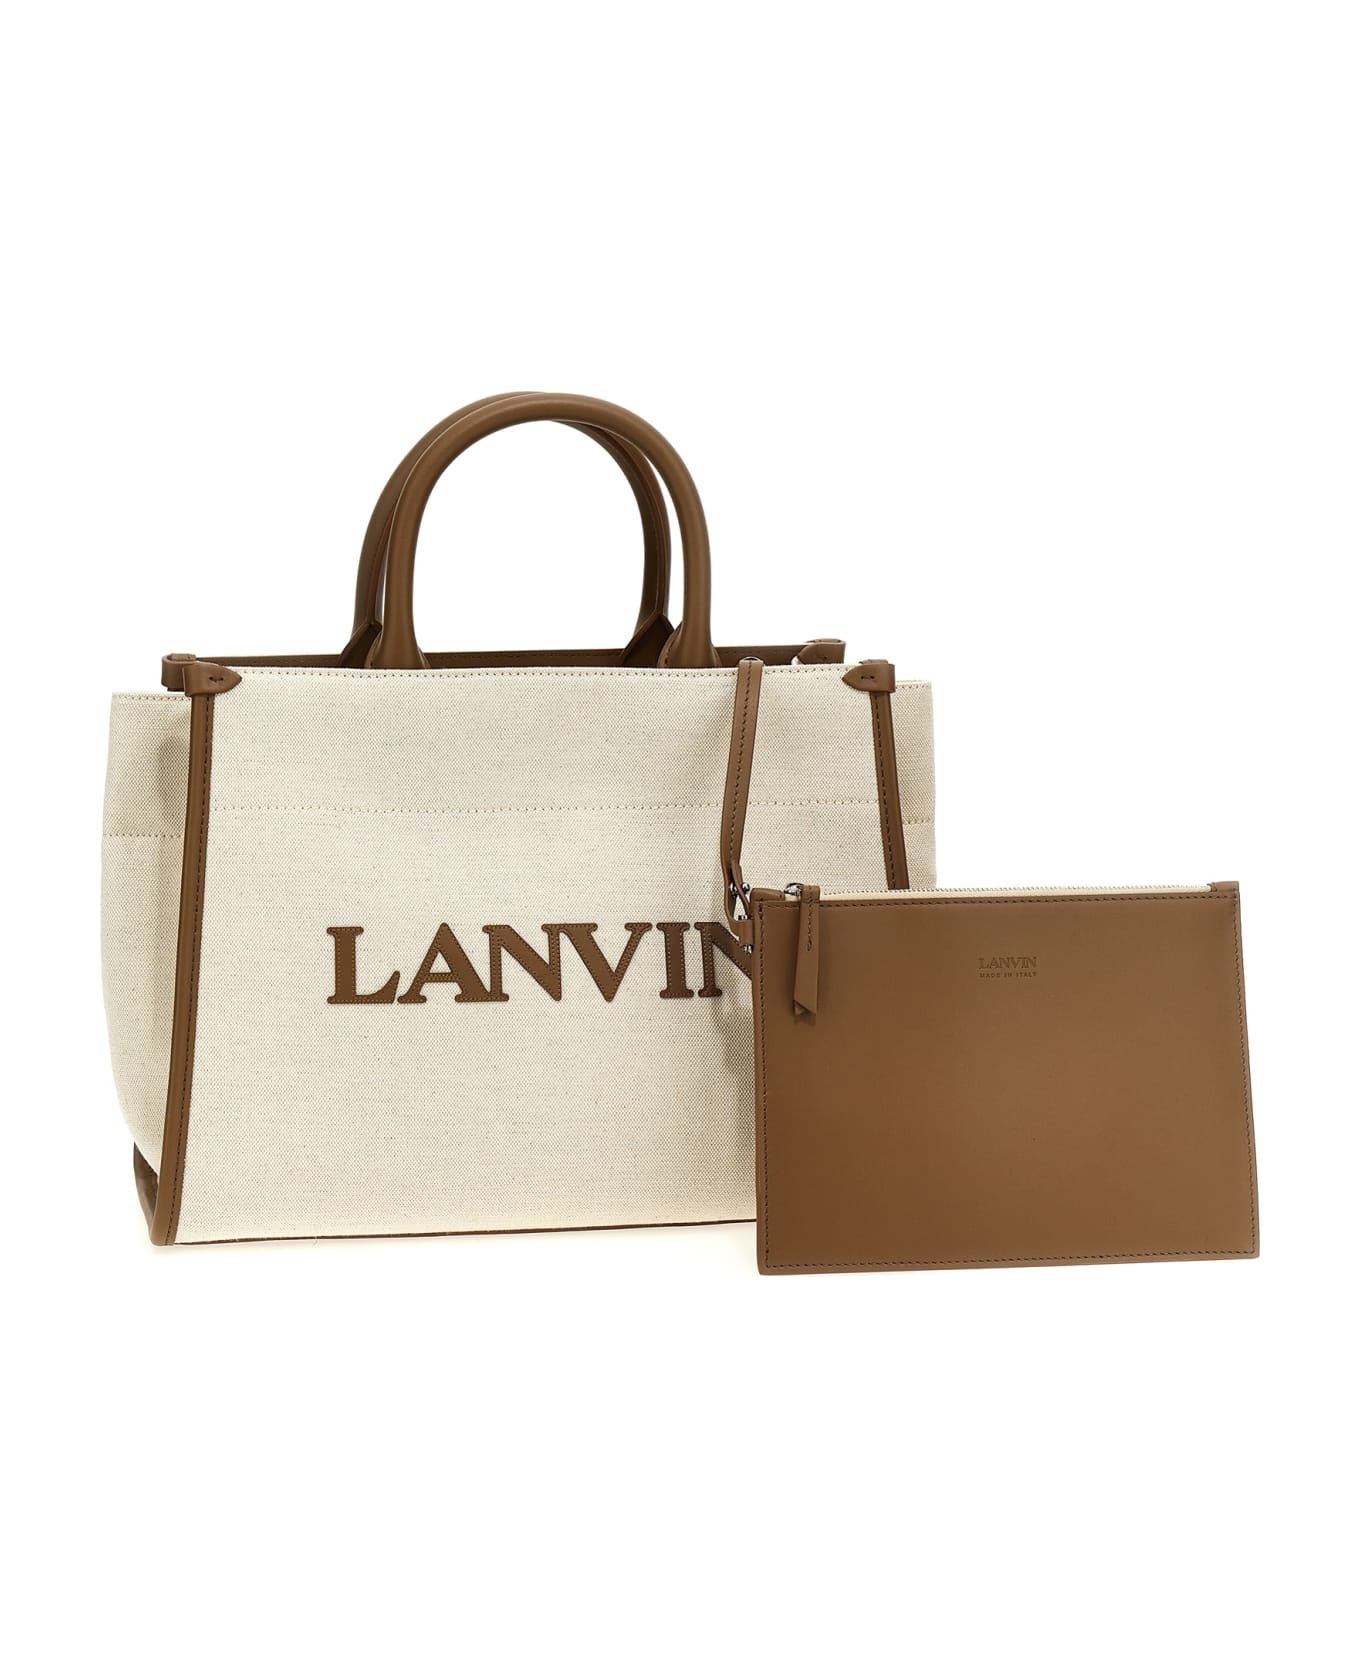 Lanvin Logo Canvas Shopping Bag - Milk Beige